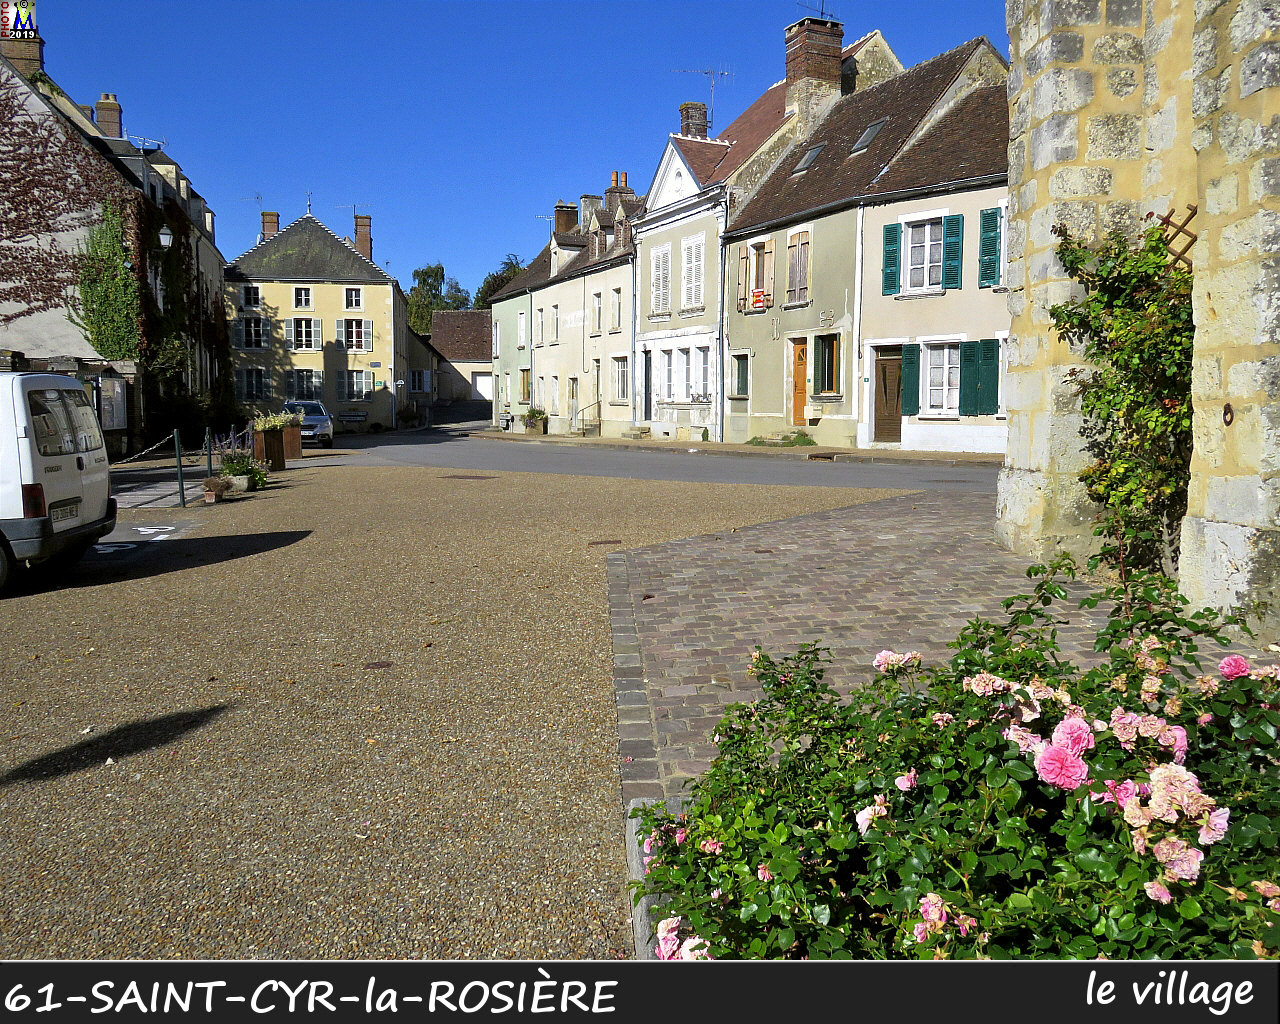 61StCYR-la-ROSIERE_village_100.jpg